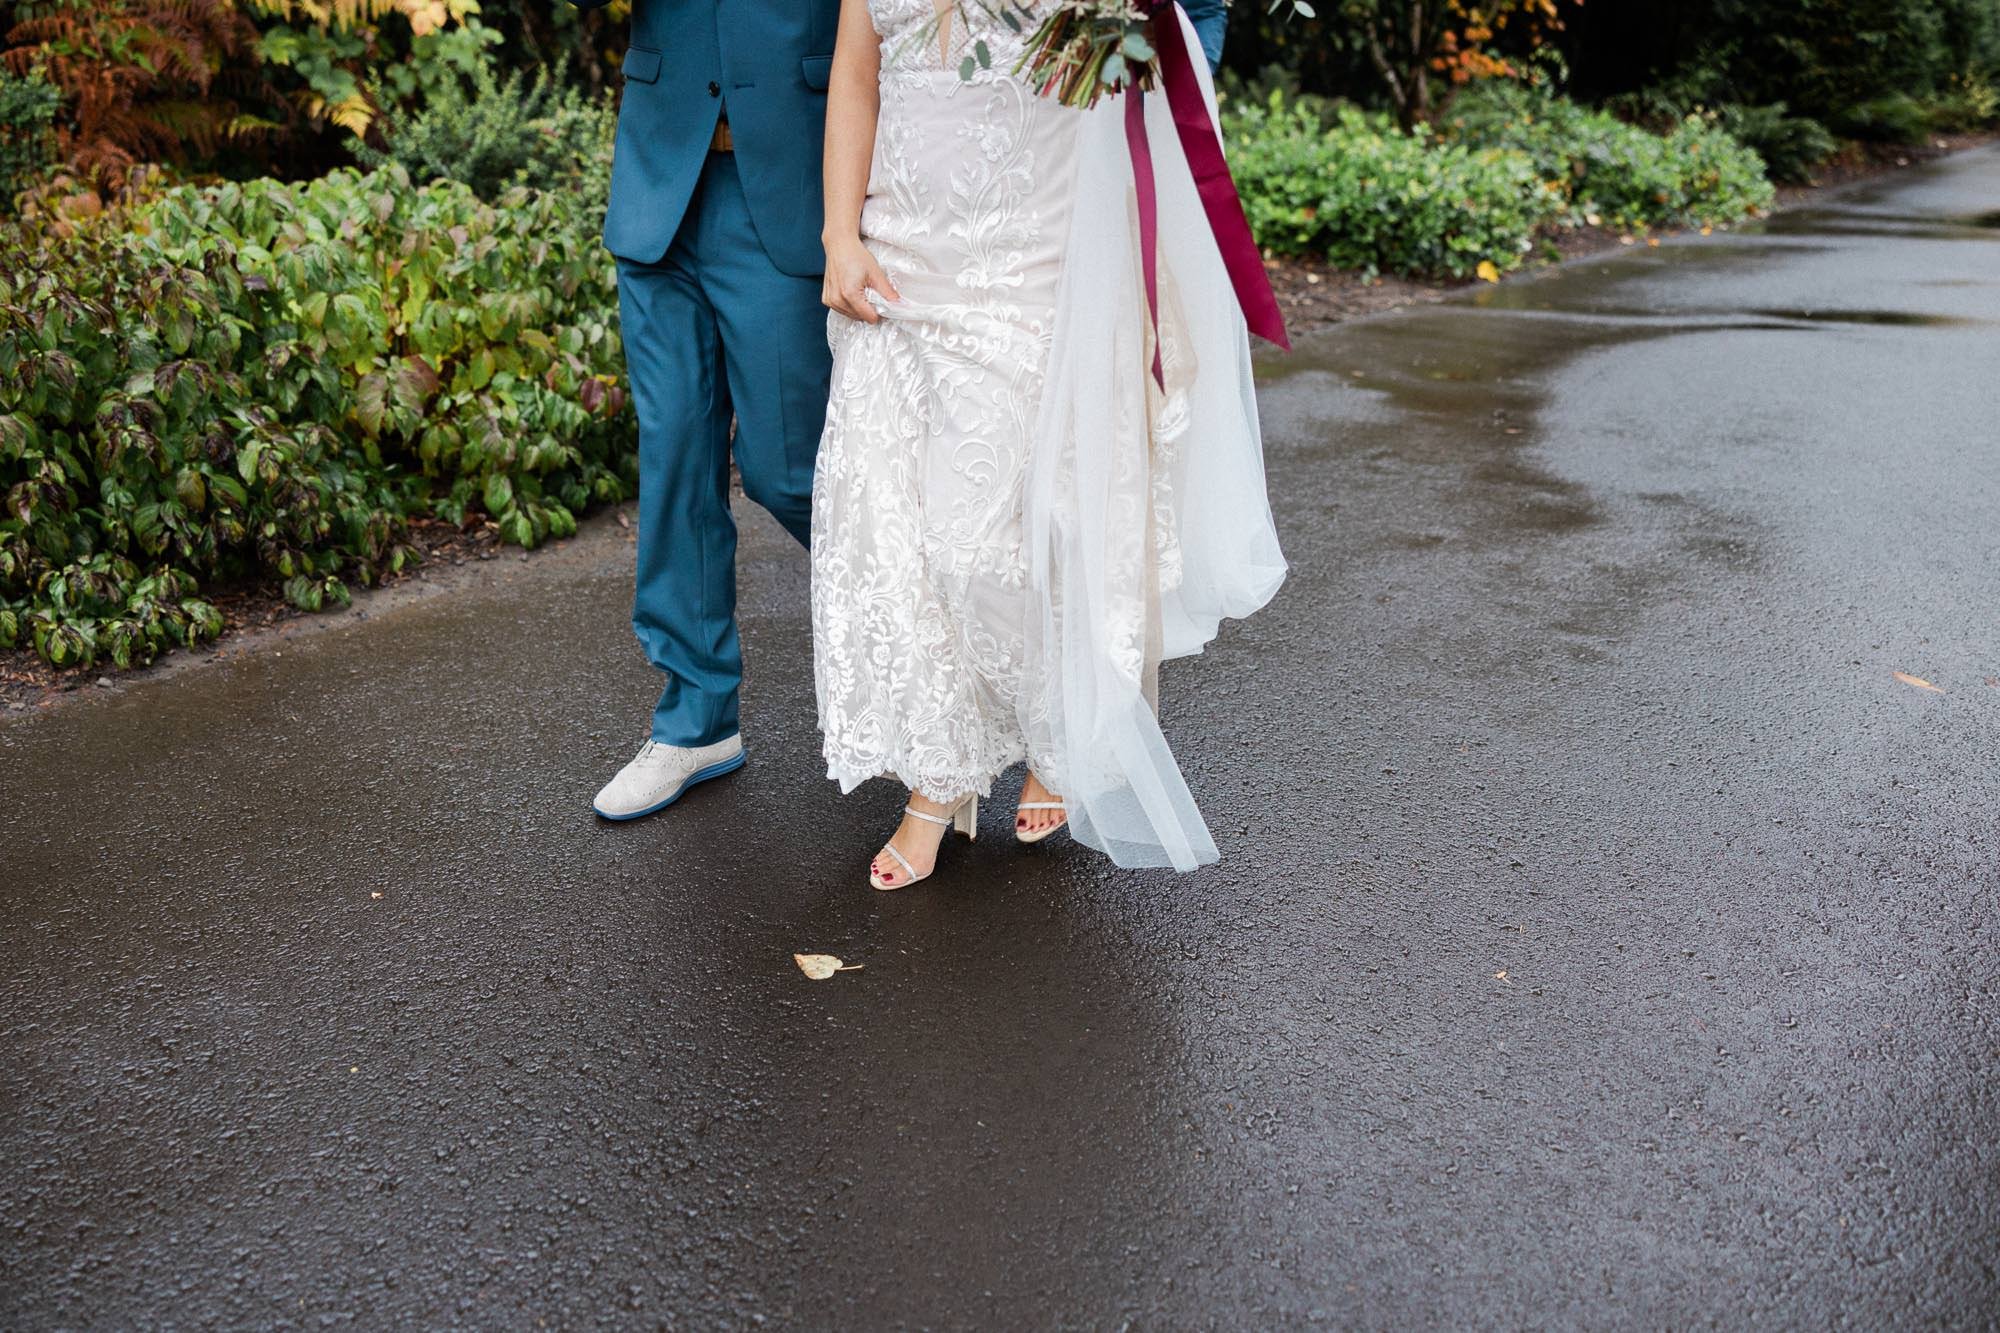 legs and feet of groom in navy blue suit and bride in white wedding dress walk on wet asphalt